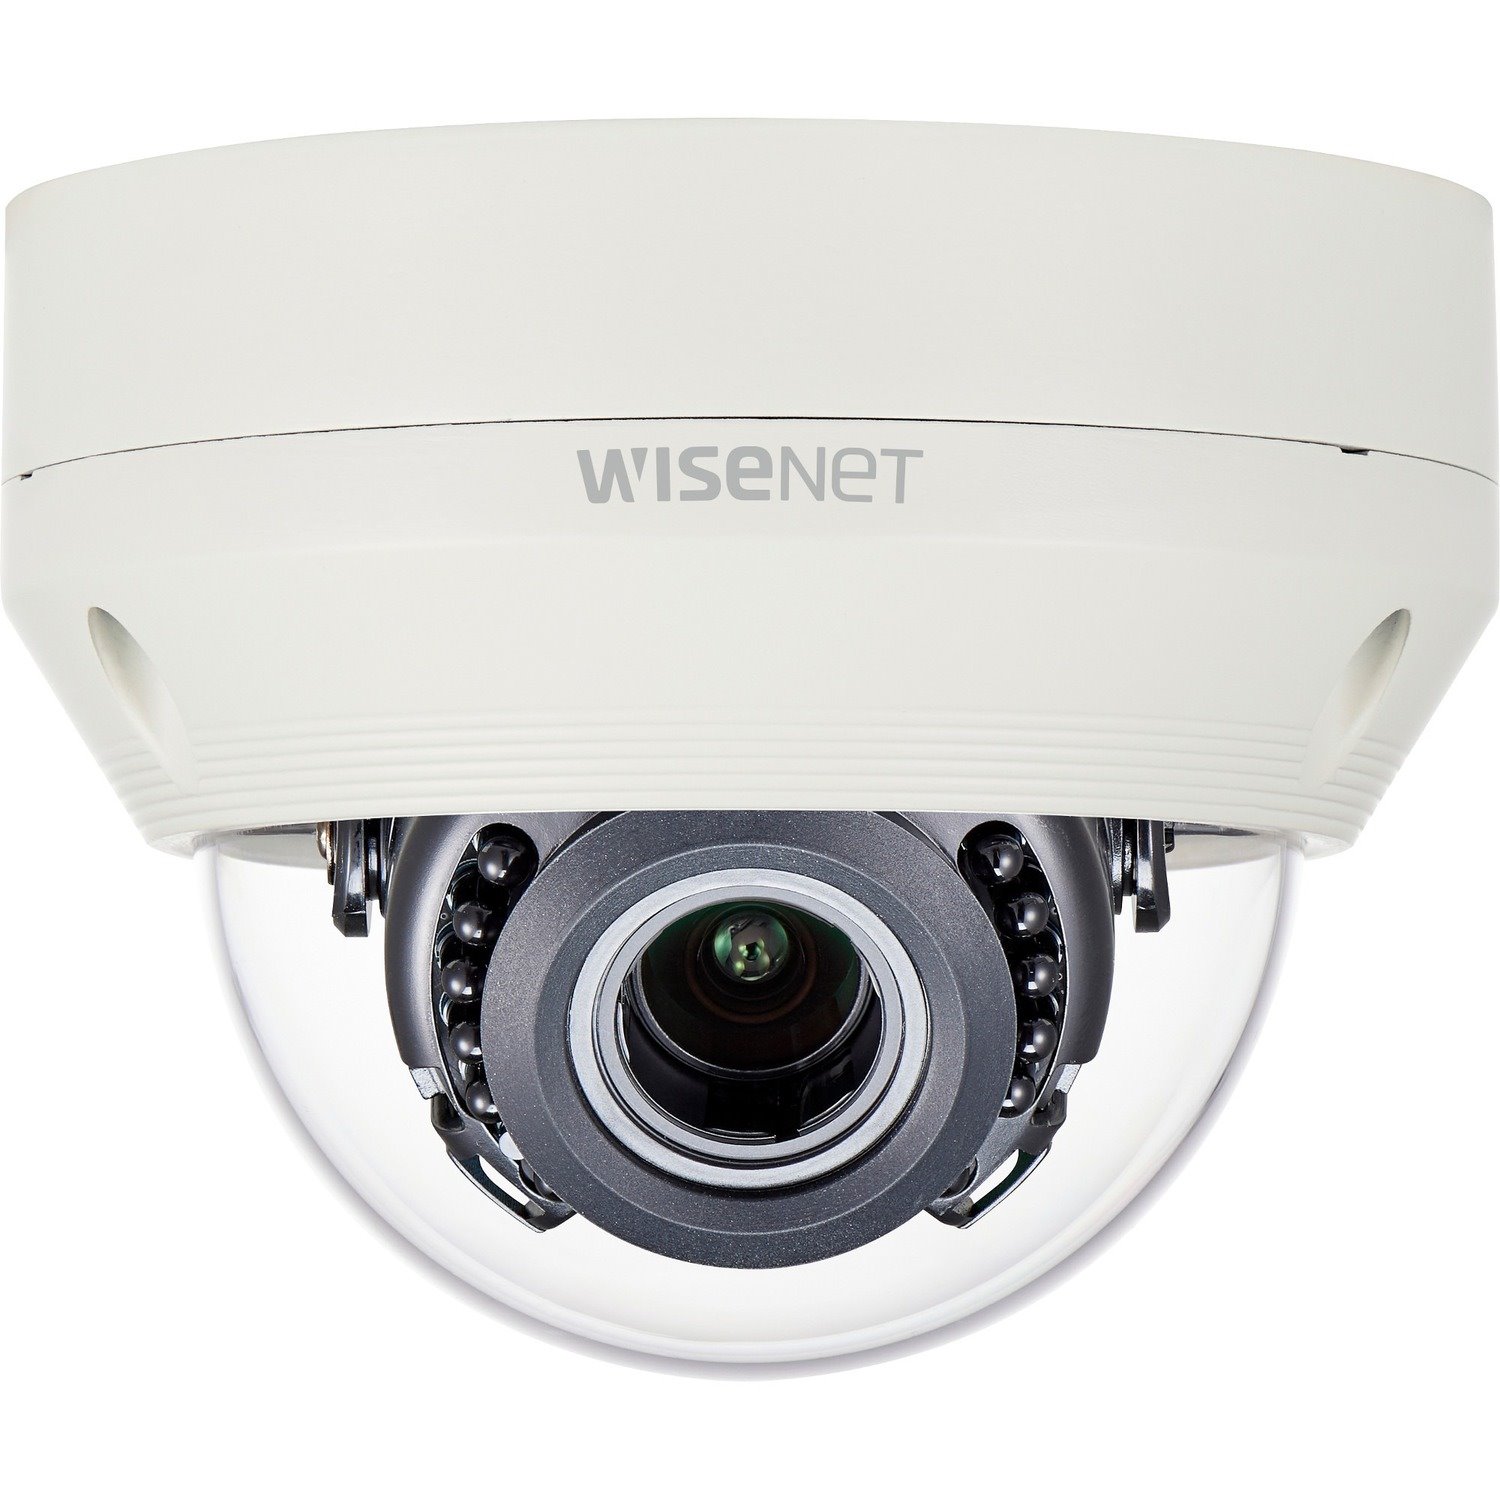 Wisenet HCV-6070R 2 Megapixel Indoor/Outdoor Full HD Surveillance Camera - Color - Dome - Ivory